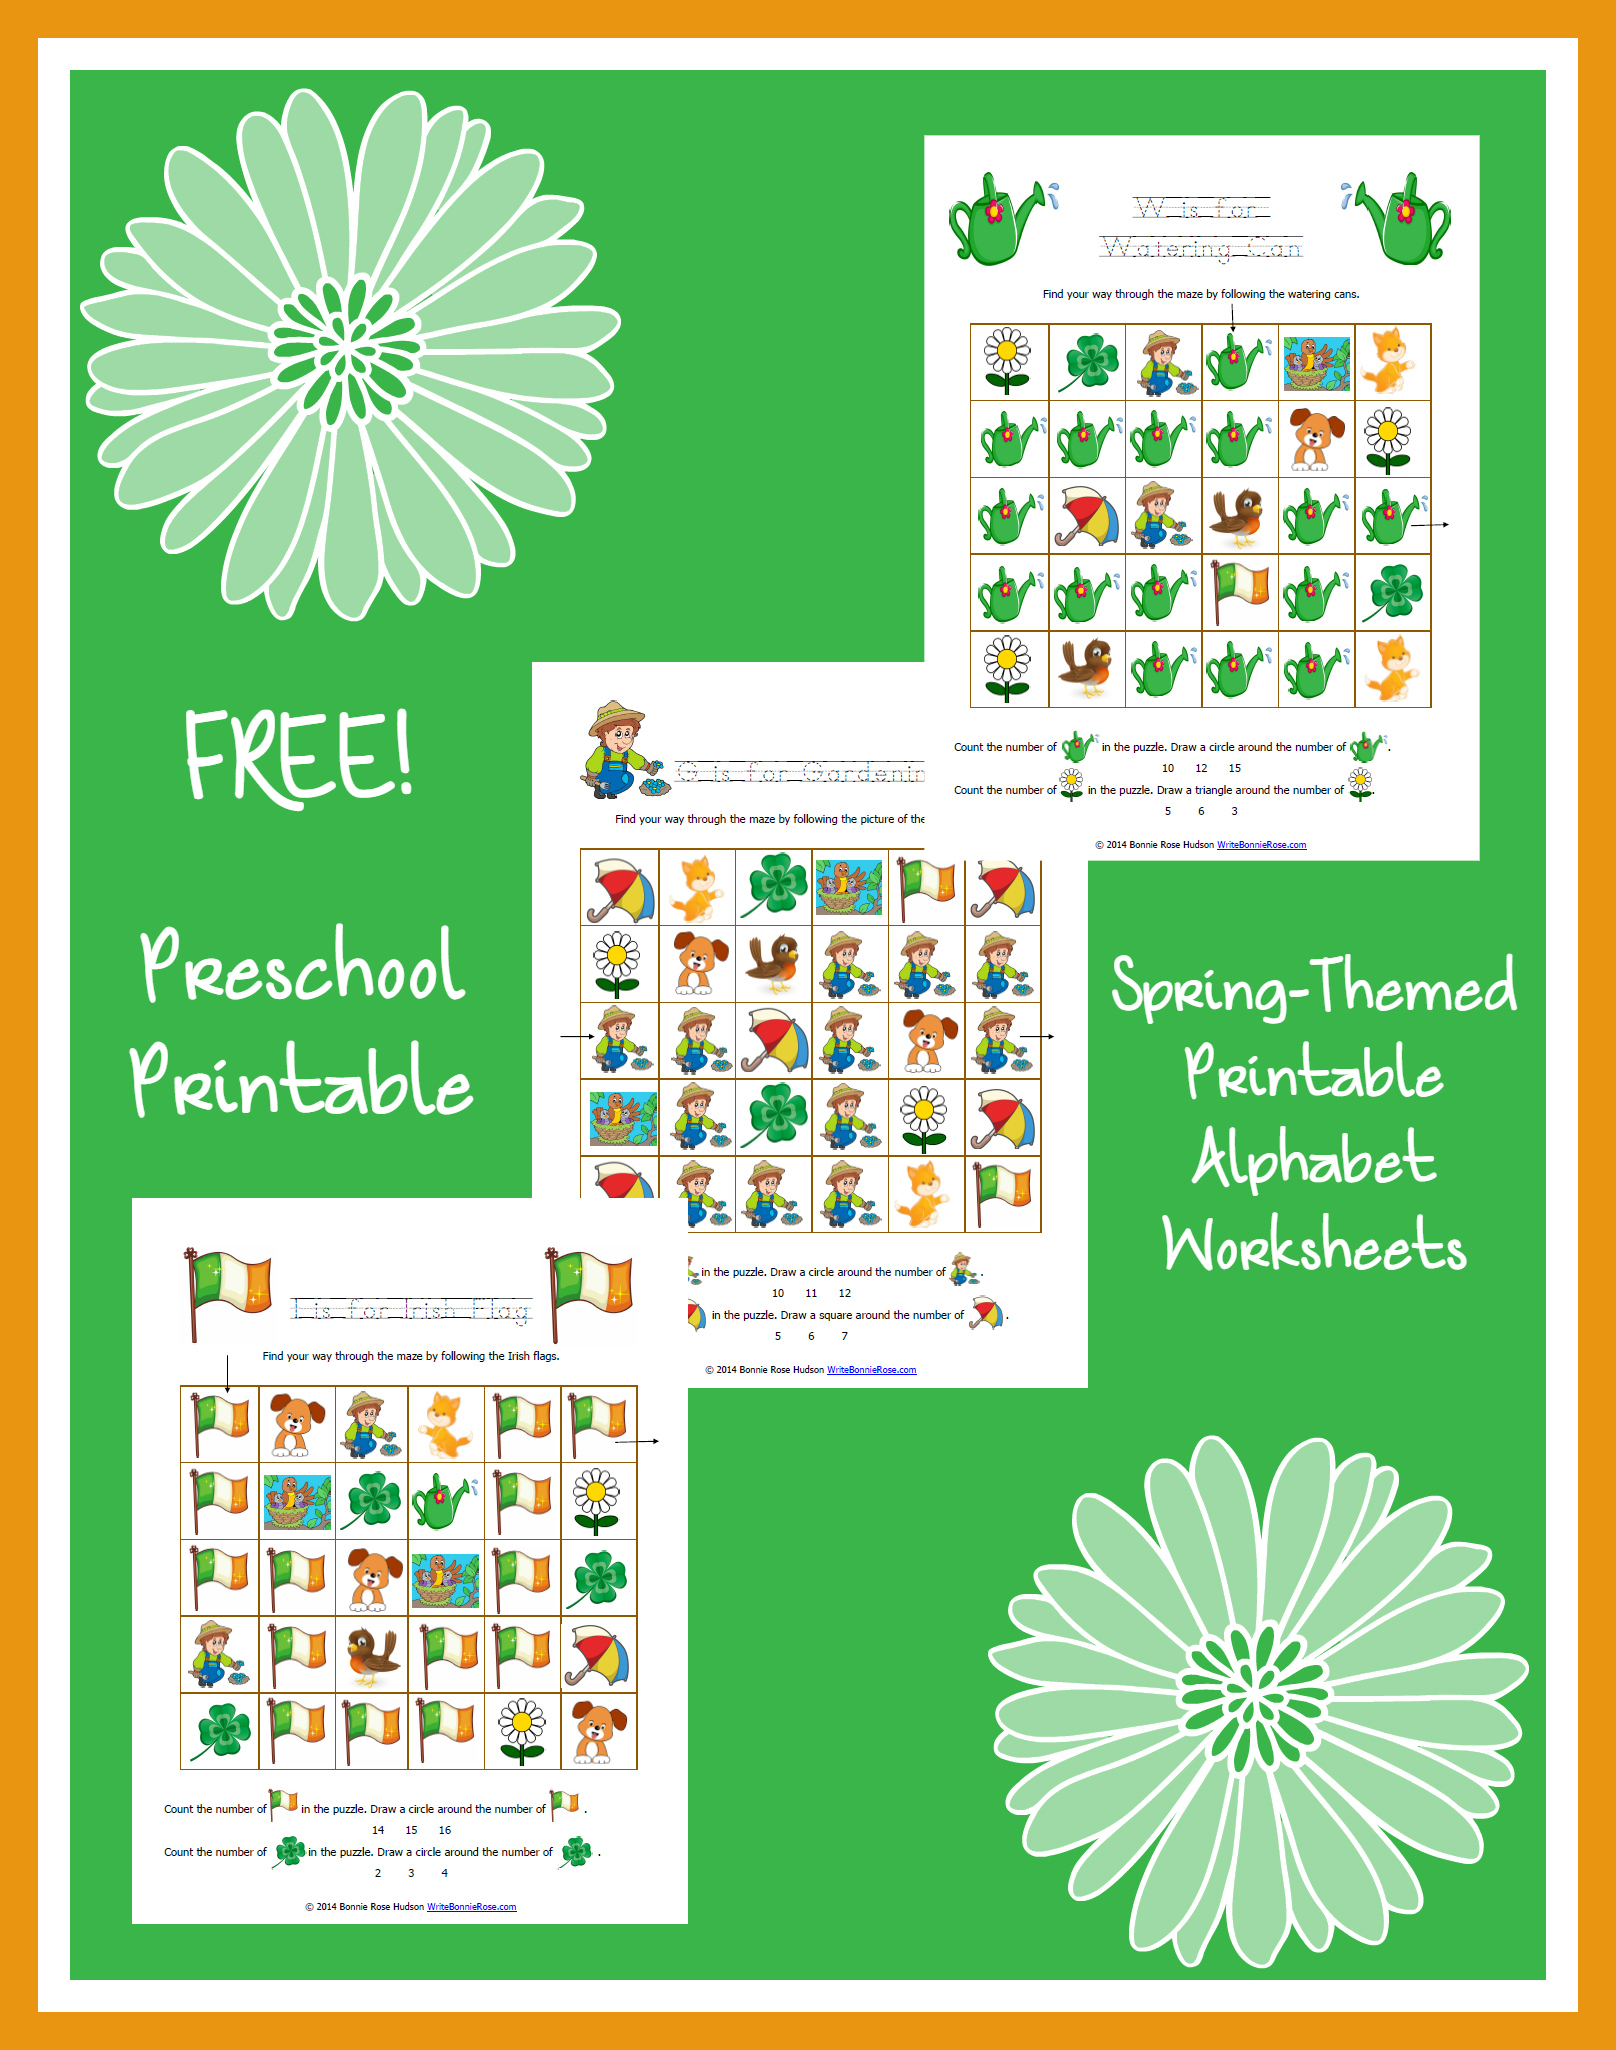 free-spring-themed-printable-alphabet-worksheets-for-preschool-writebonnierose